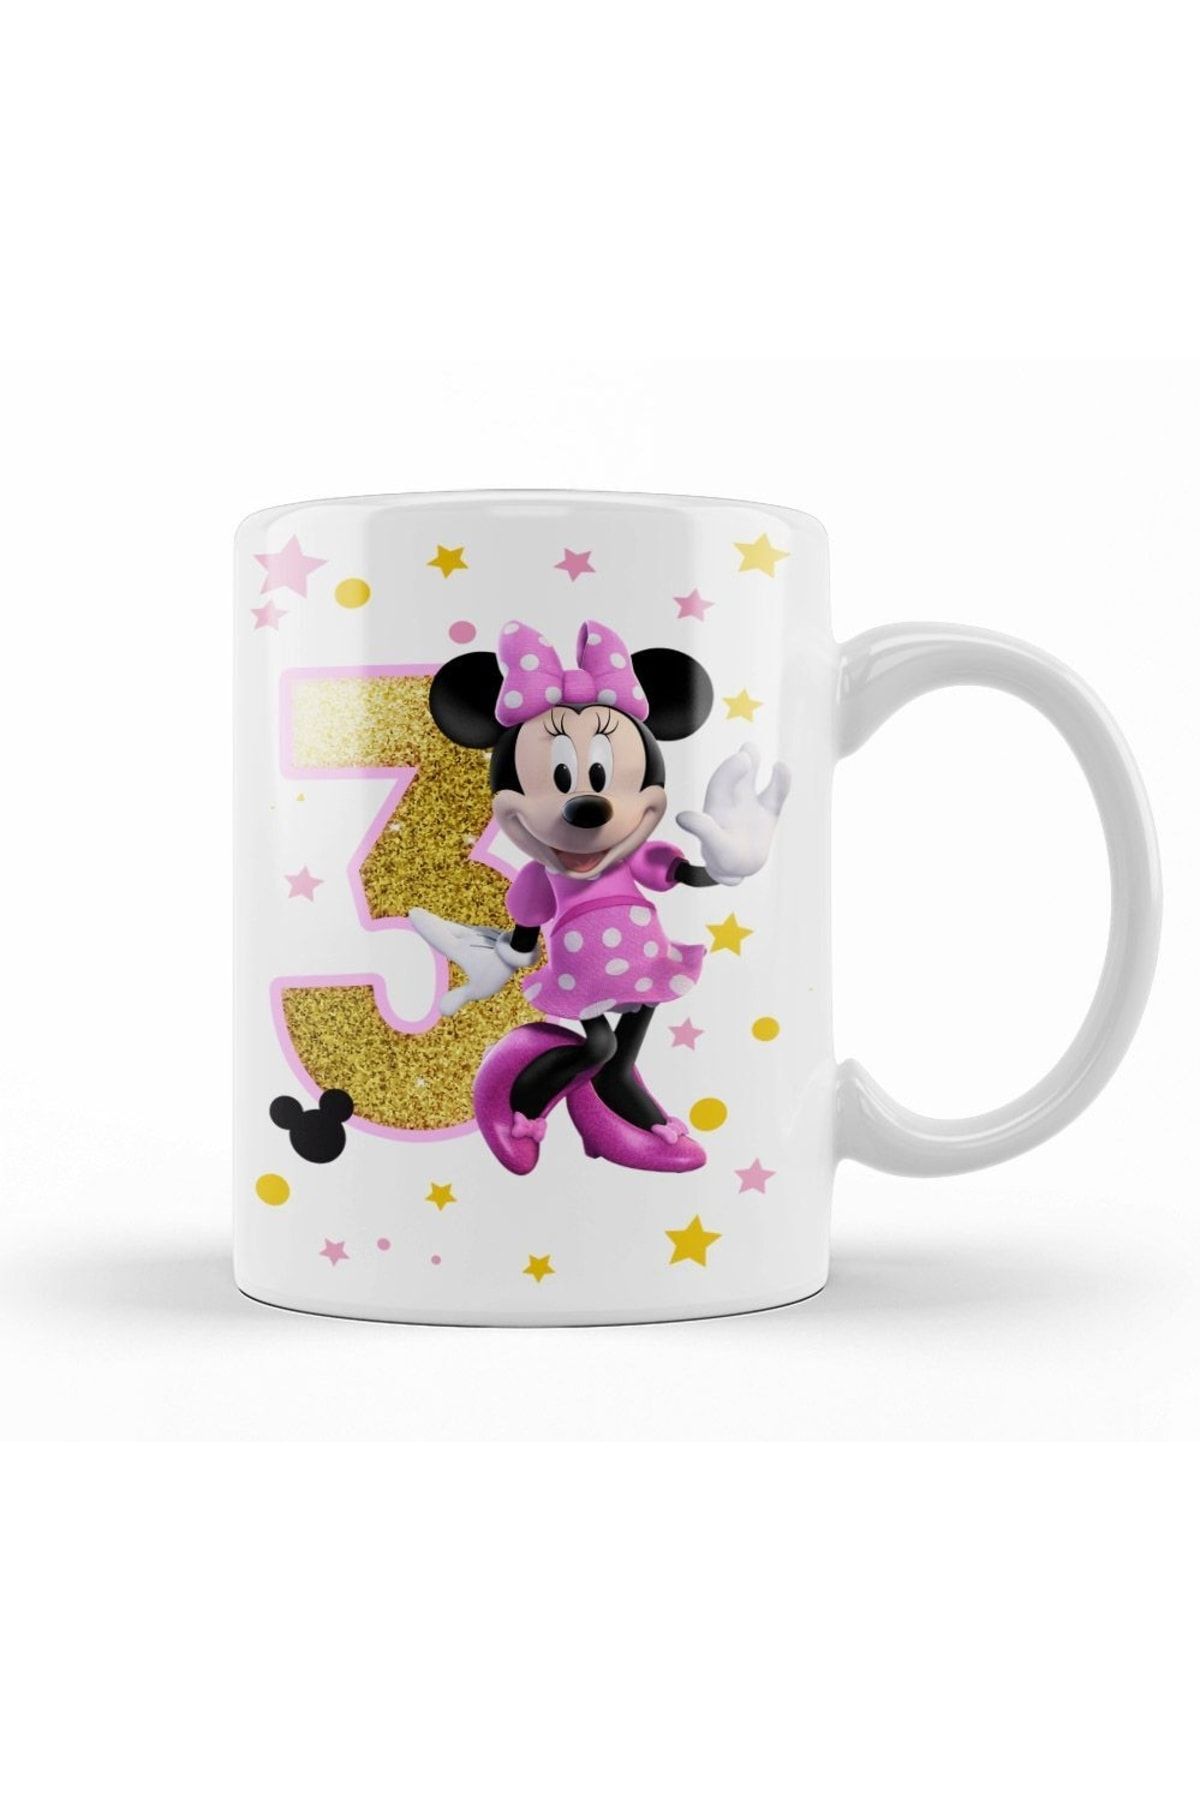 Humuts Mini Fare Minnie Mouse 3 Üç Yaş Hediyesi Kupa Bardak Porselen